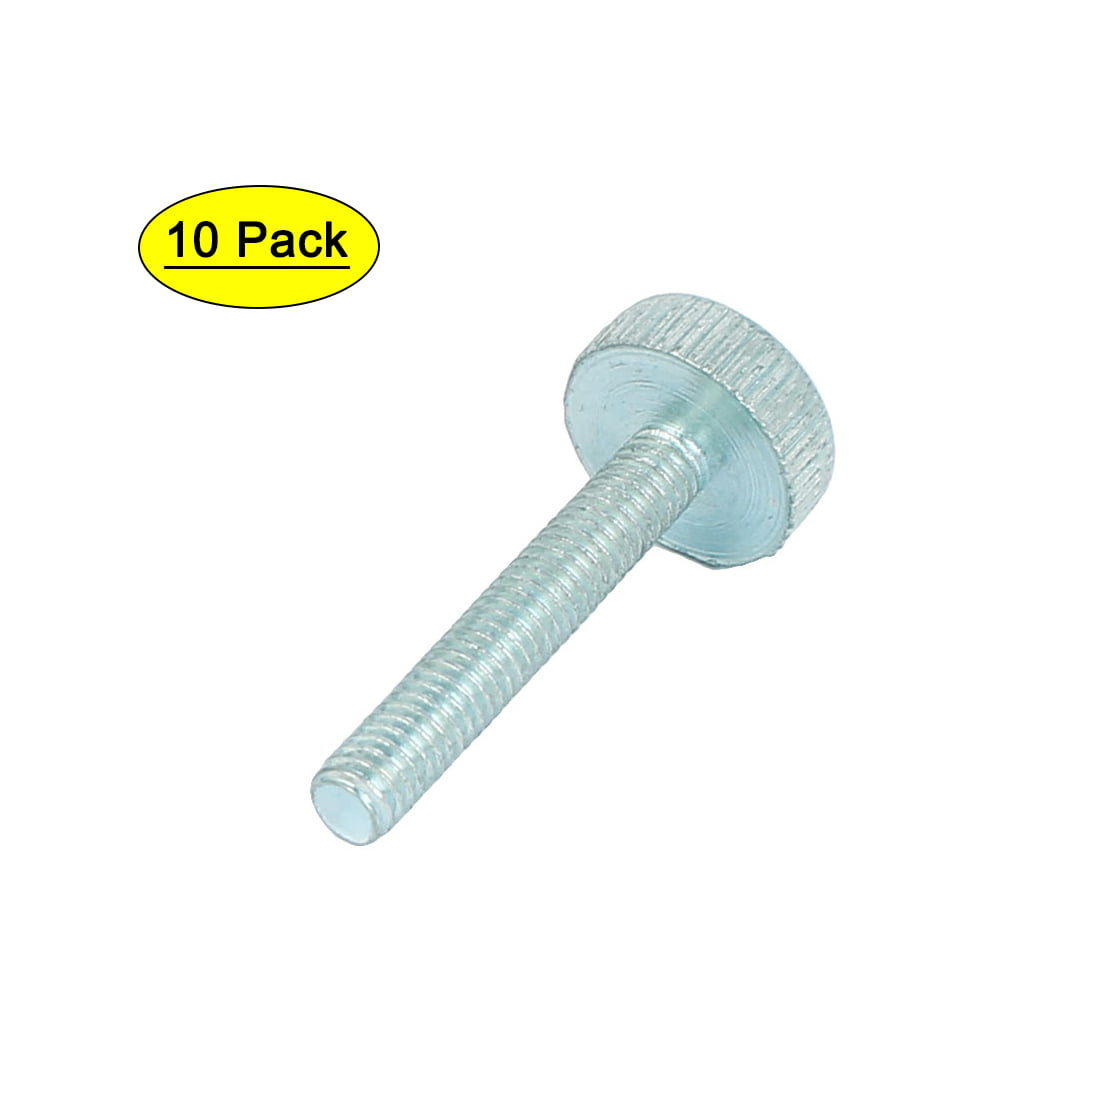 Aexit M8x10mm Thread Standard Parts Zinc Plated Knurled Round Head Thumb Screws Silver Blue 5pcs Model:54as44qo468